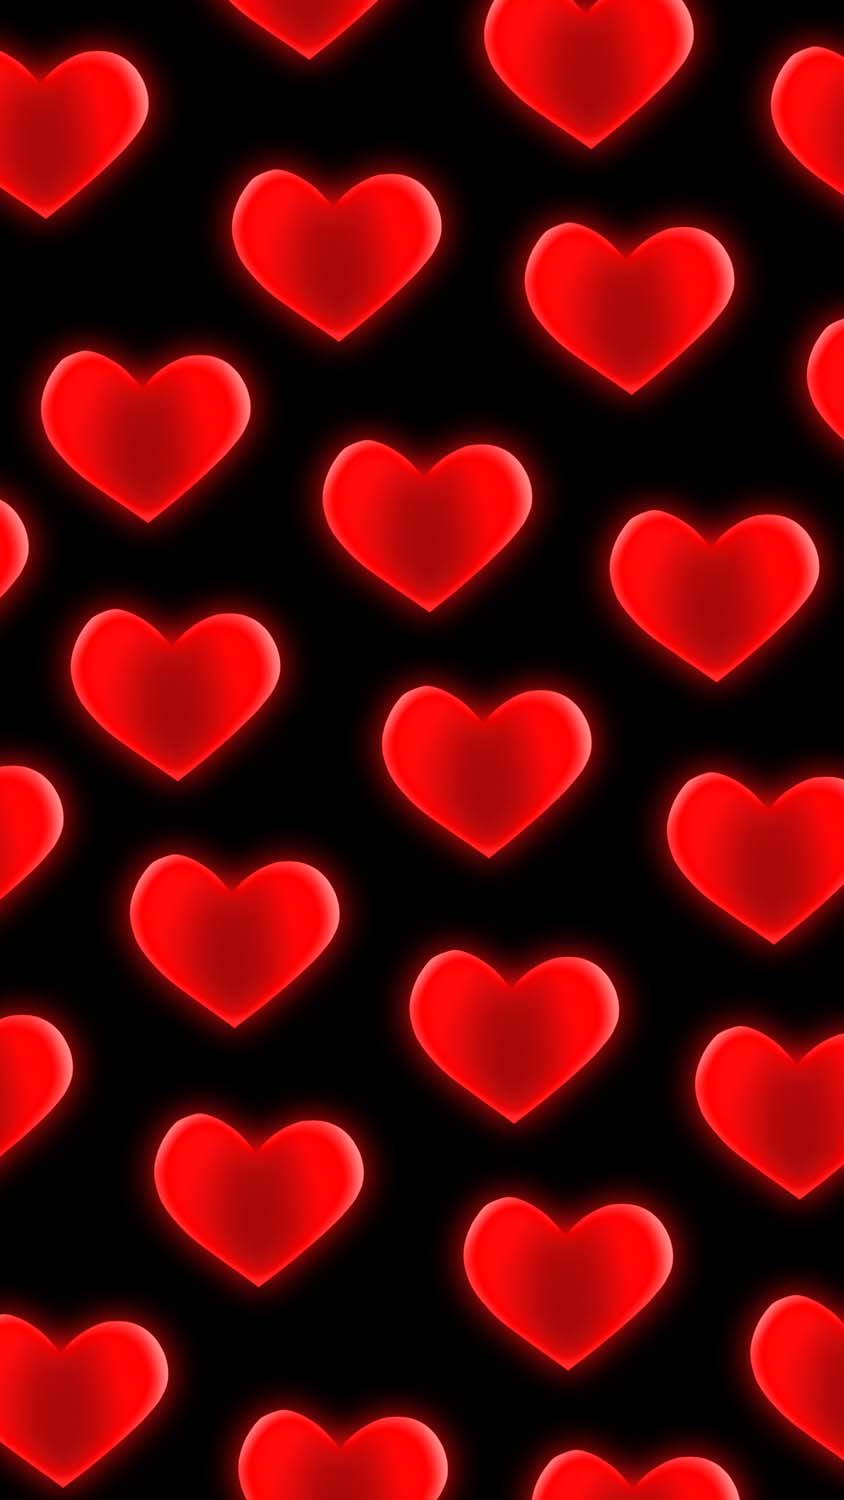 Love Hearts iPhone Wallpaper HD